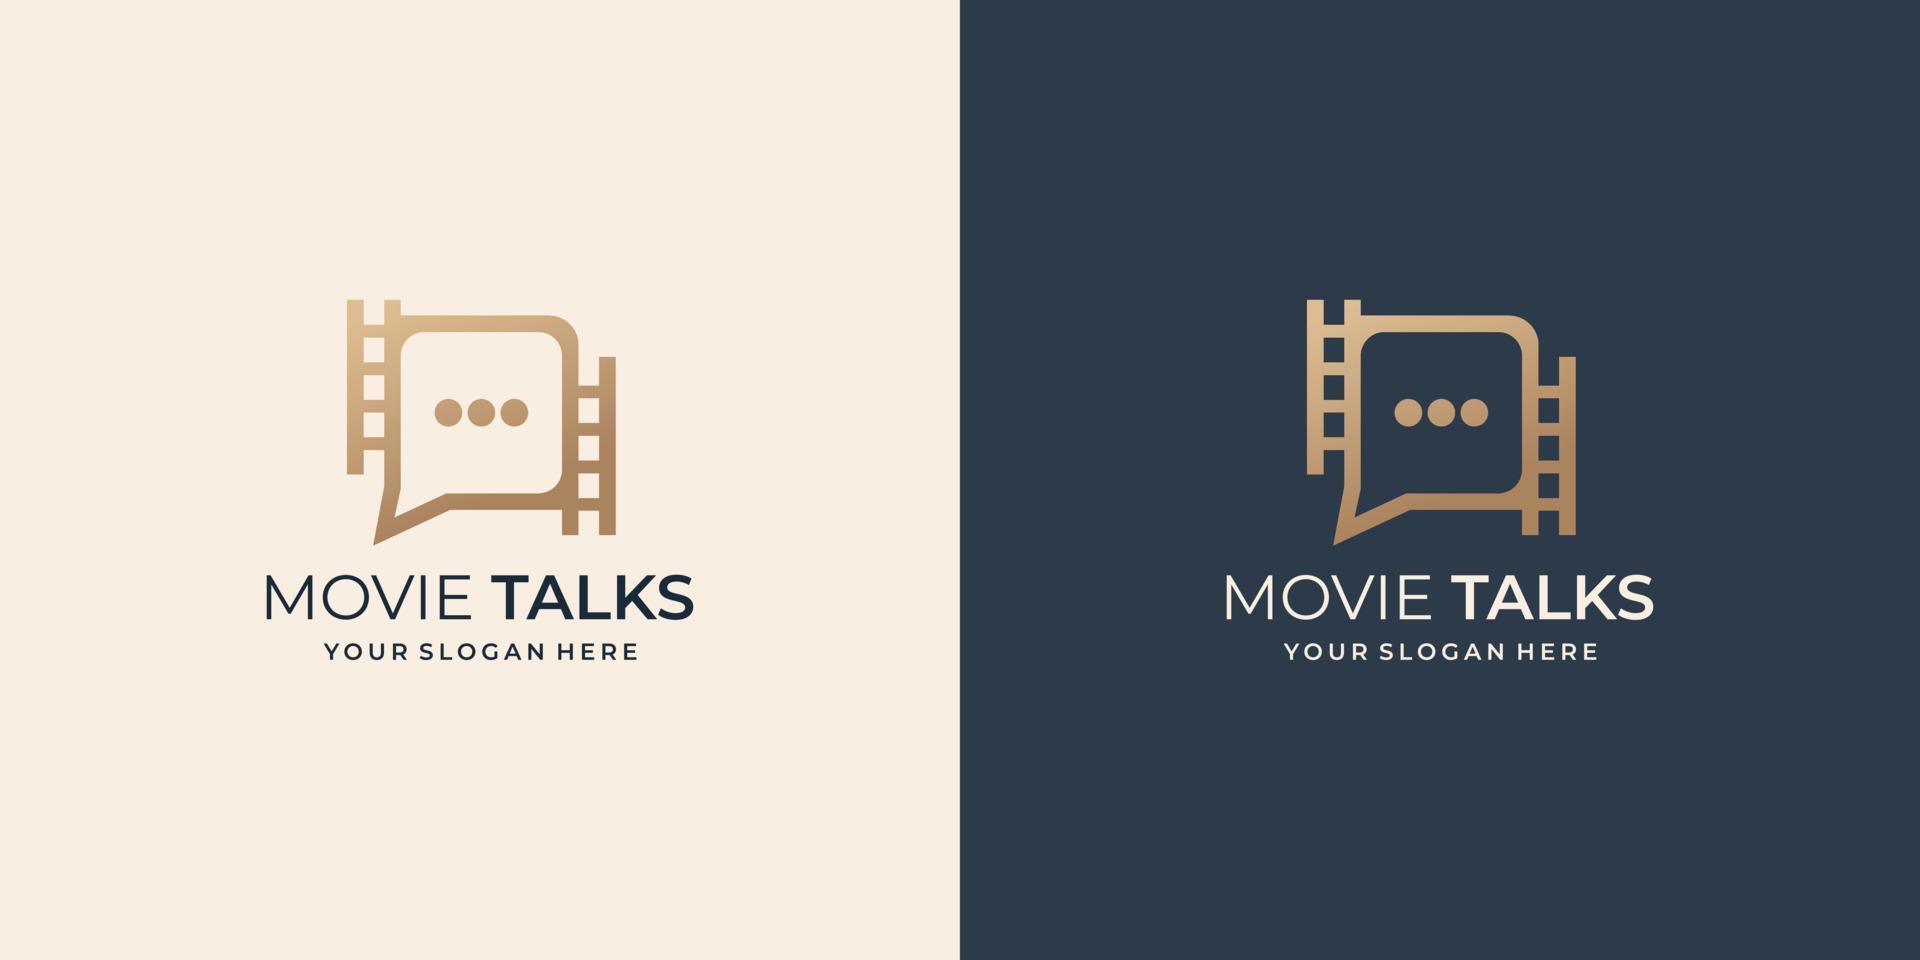 movie talks film stripe logo design. creative symbol movie film stripes logos and chat talk design. vector